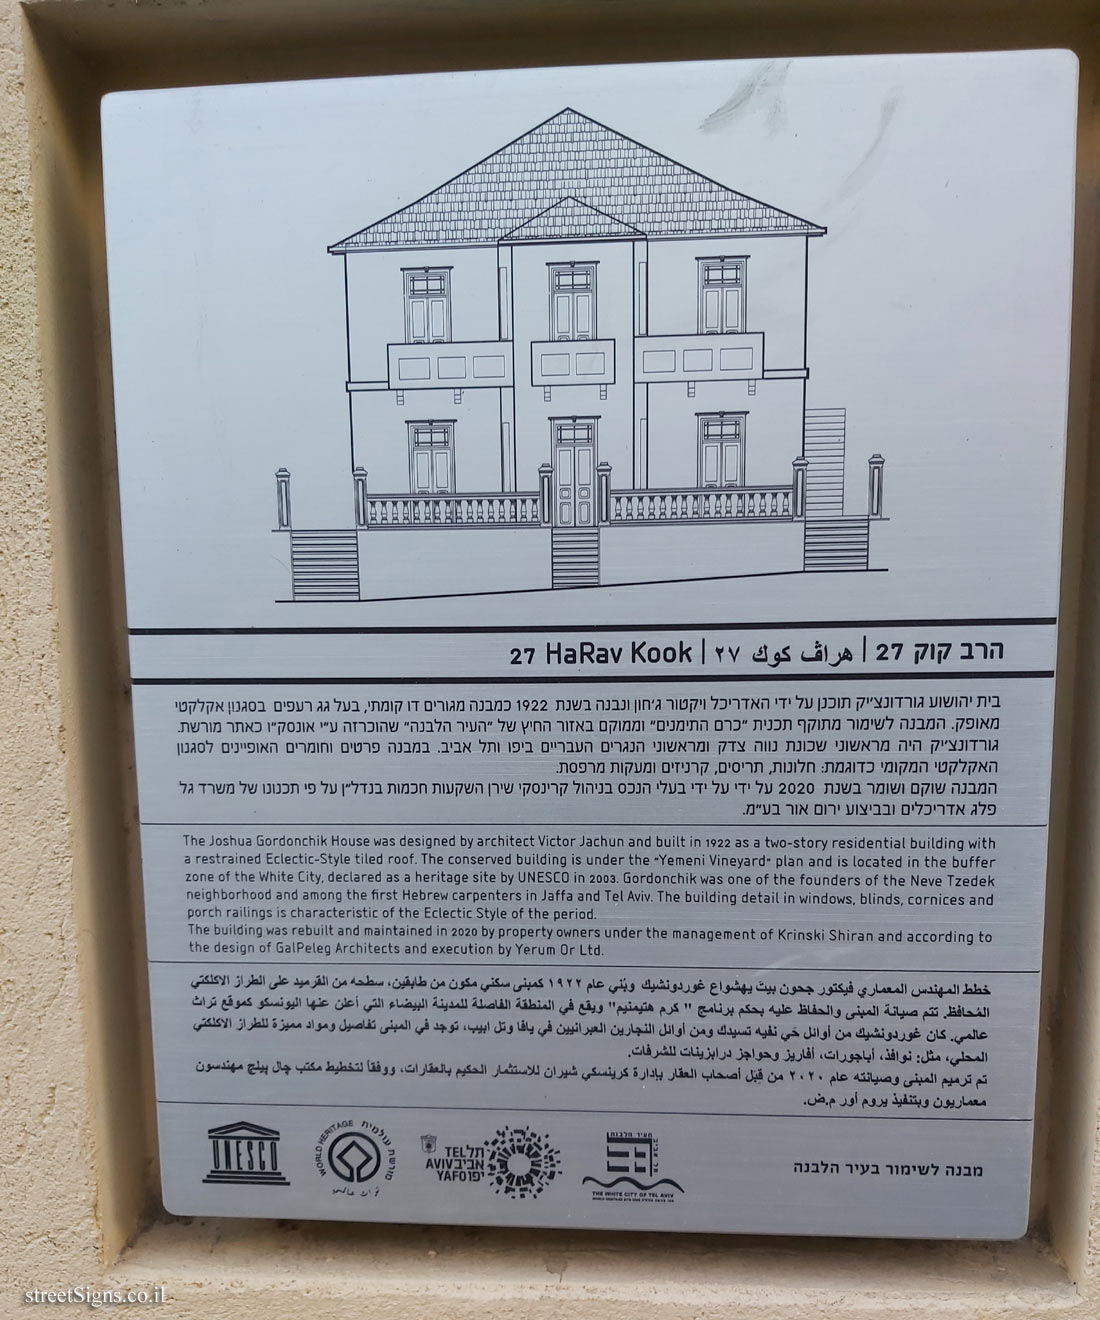 Tel Aviv - buildings for conservation - 27 HaRav Kook